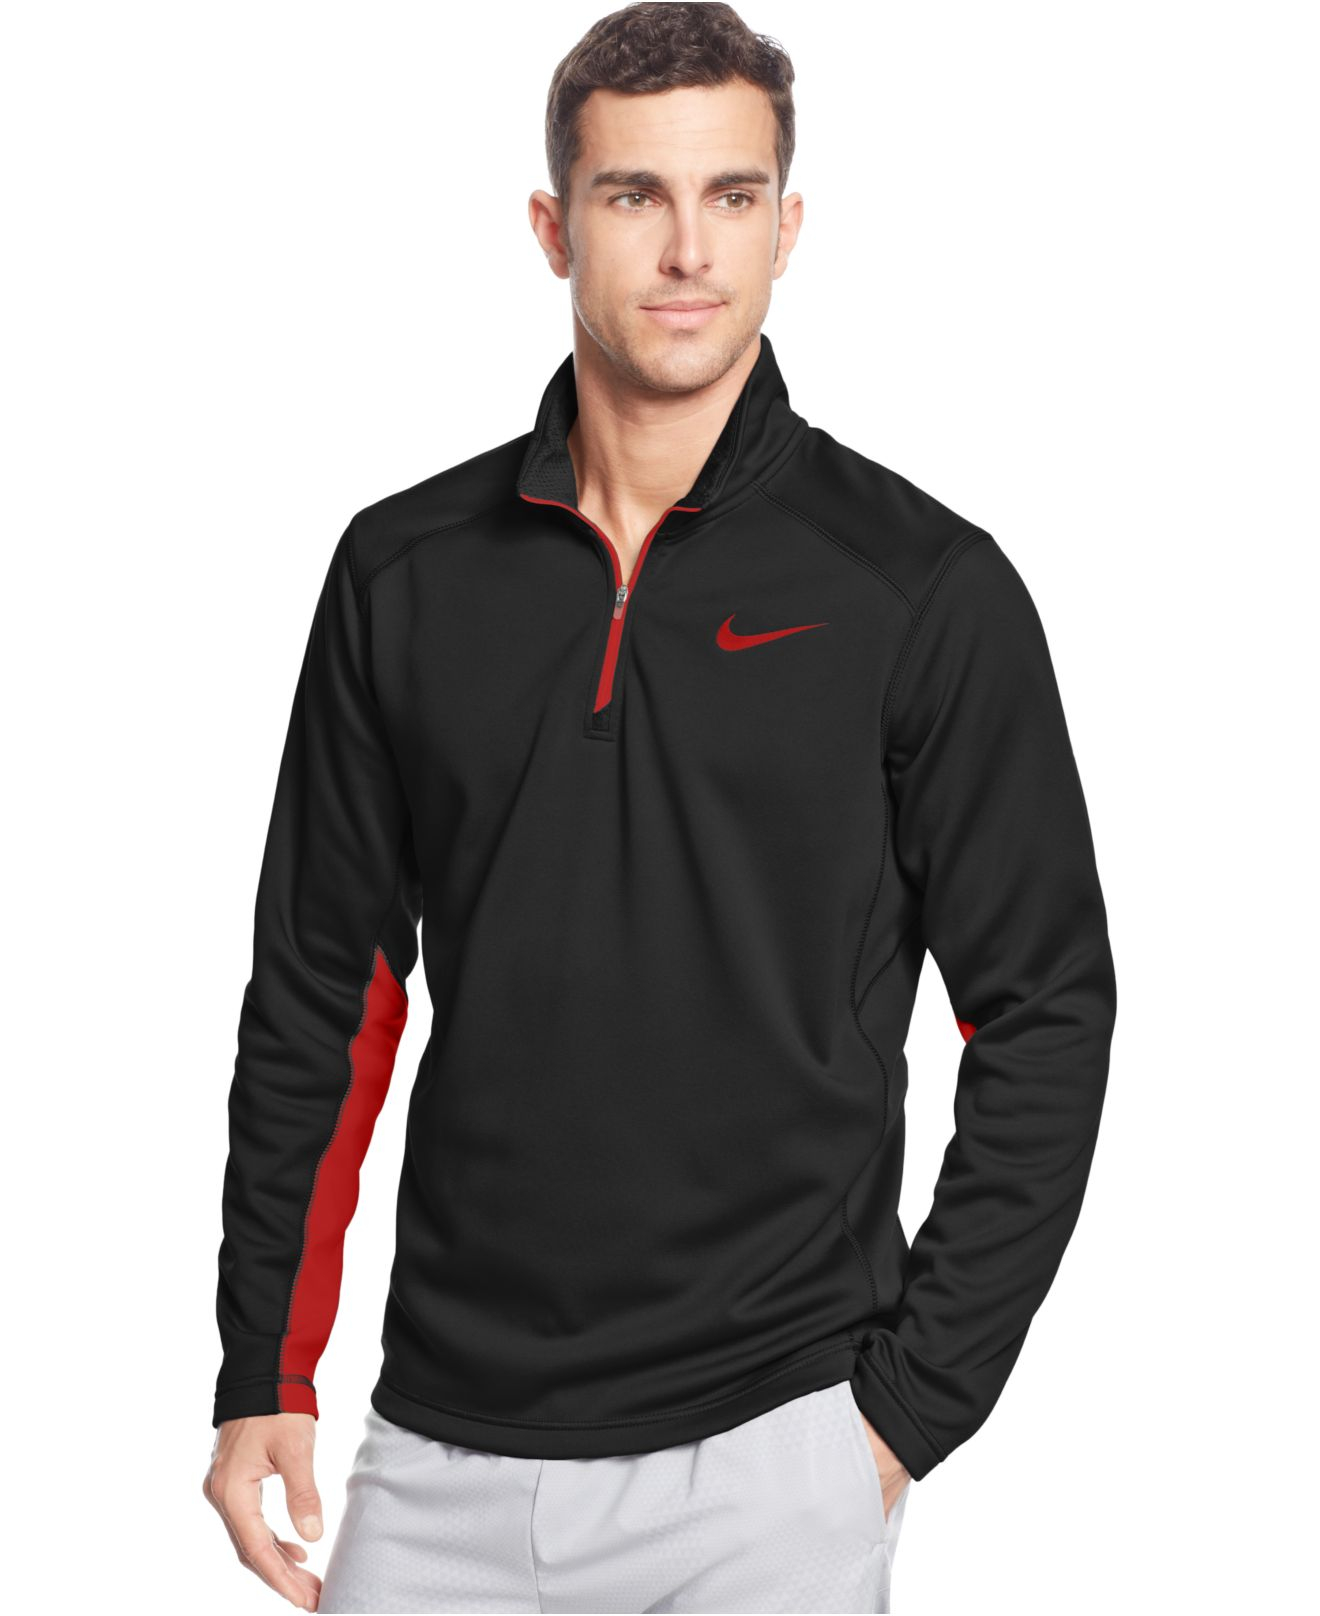 Download Lyst - Nike Ko Quarter-Zip Pullover in Black for Men